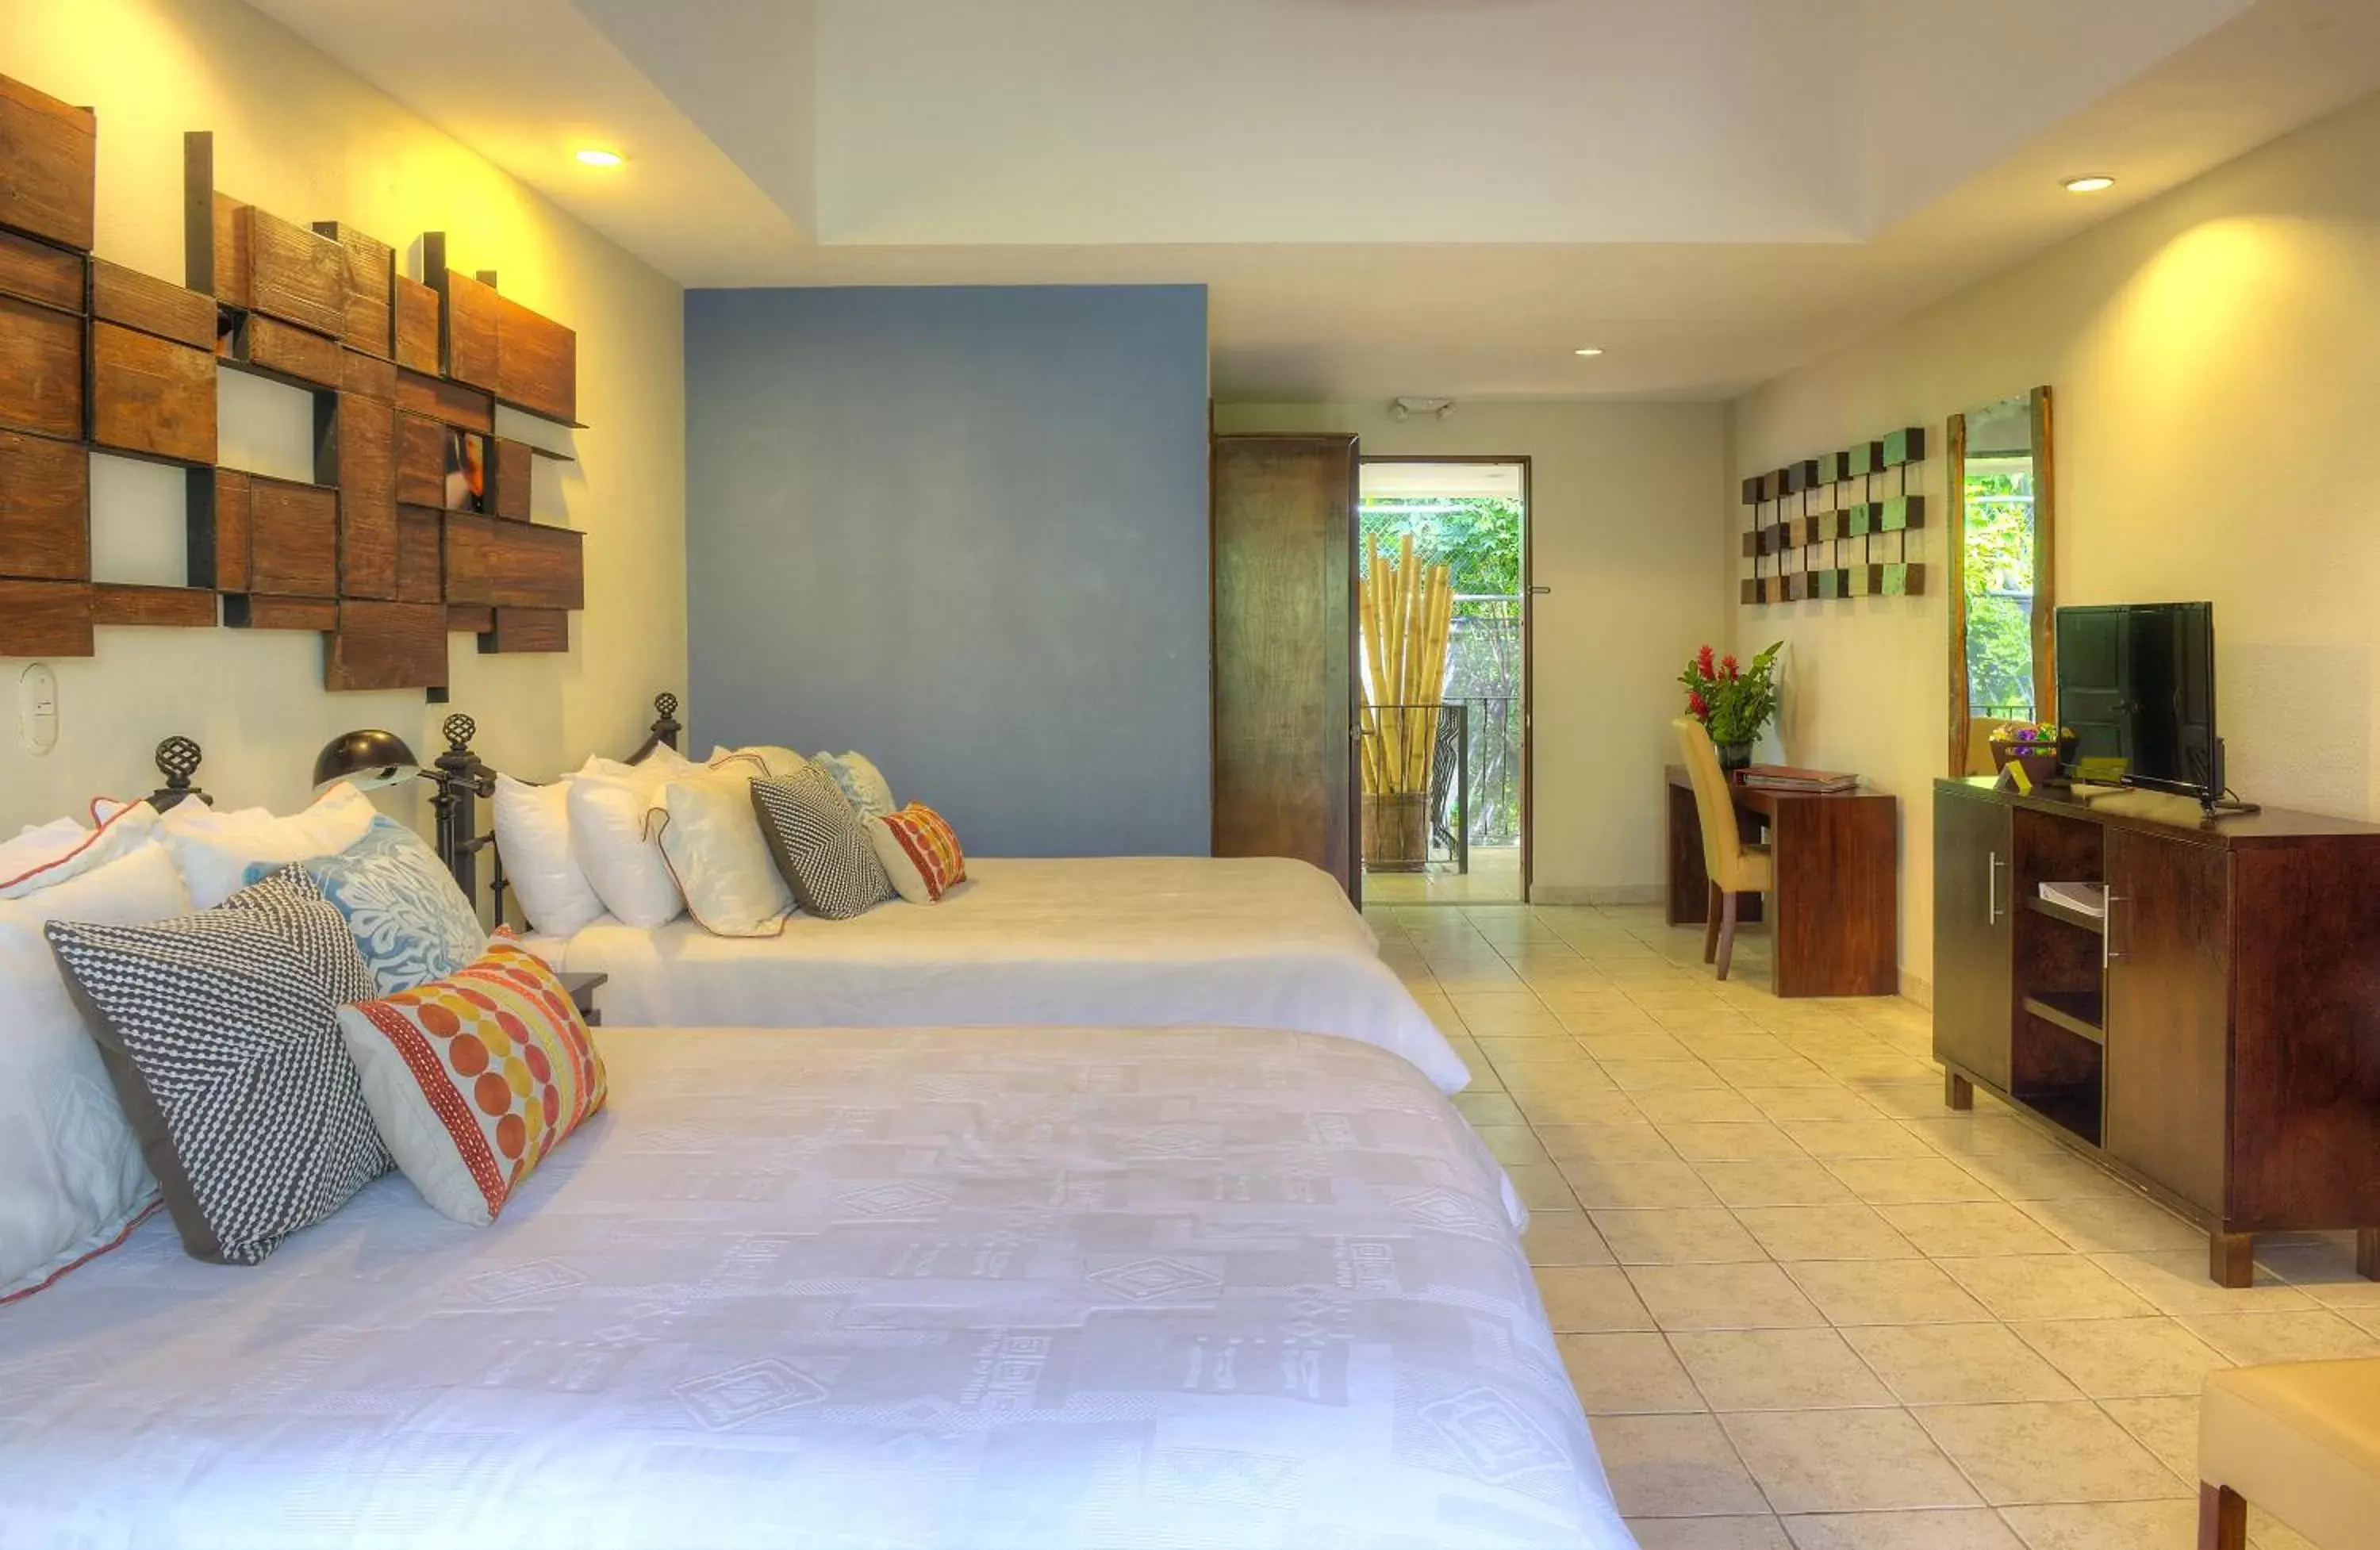 Bed, Room Photo in Pumilio Mountain & Ocean Hotel